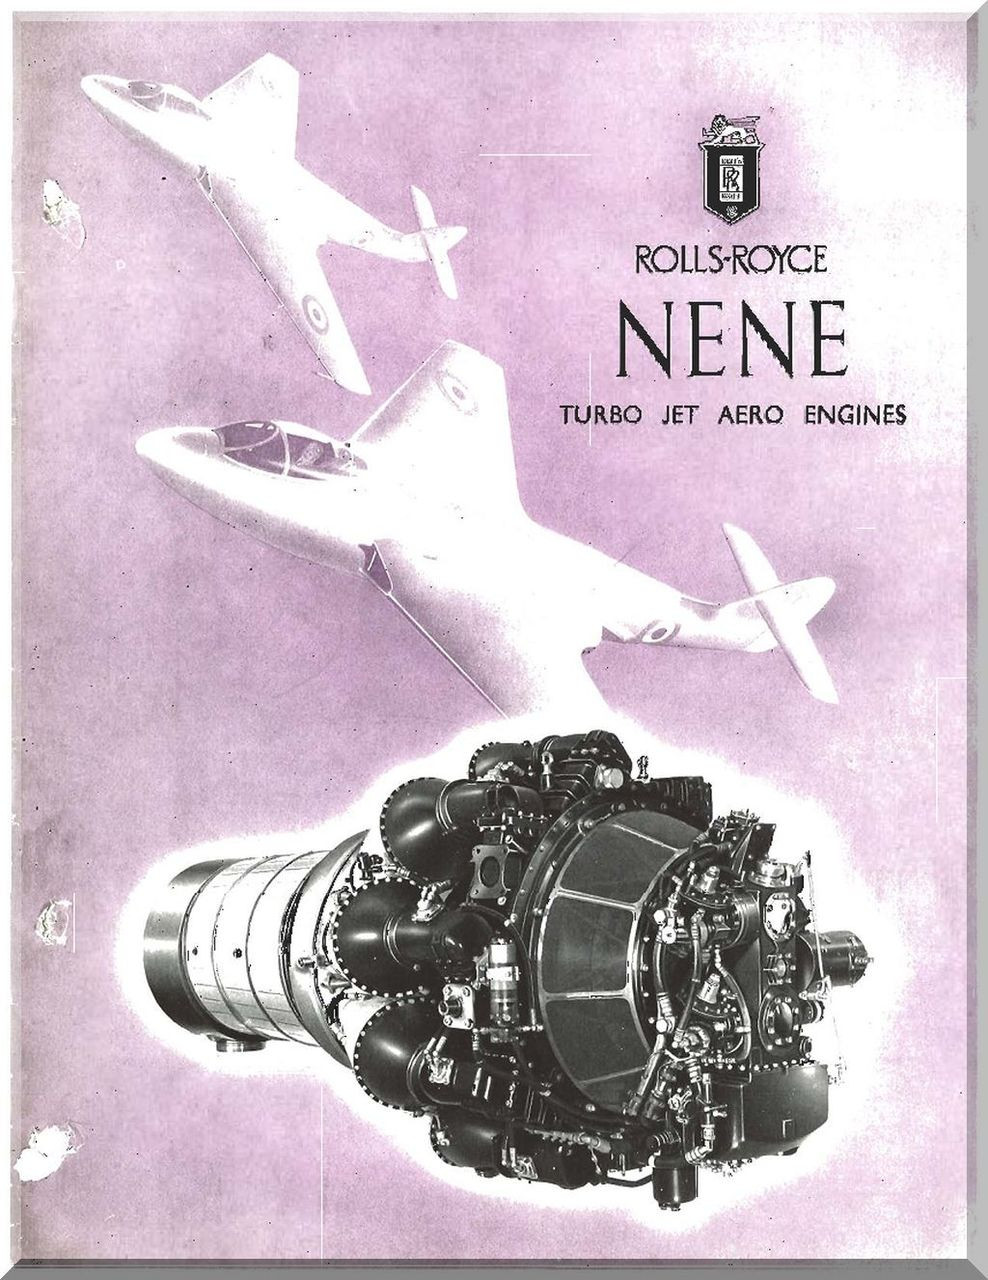 Rolls Royce " Nene " Aircraft Engine Technical Brochure Manual ( English  Language ) - Aircraft Reports - Aircraft Manuals - Aircraft Helicopter  Engines Propellers Blueprints Publications